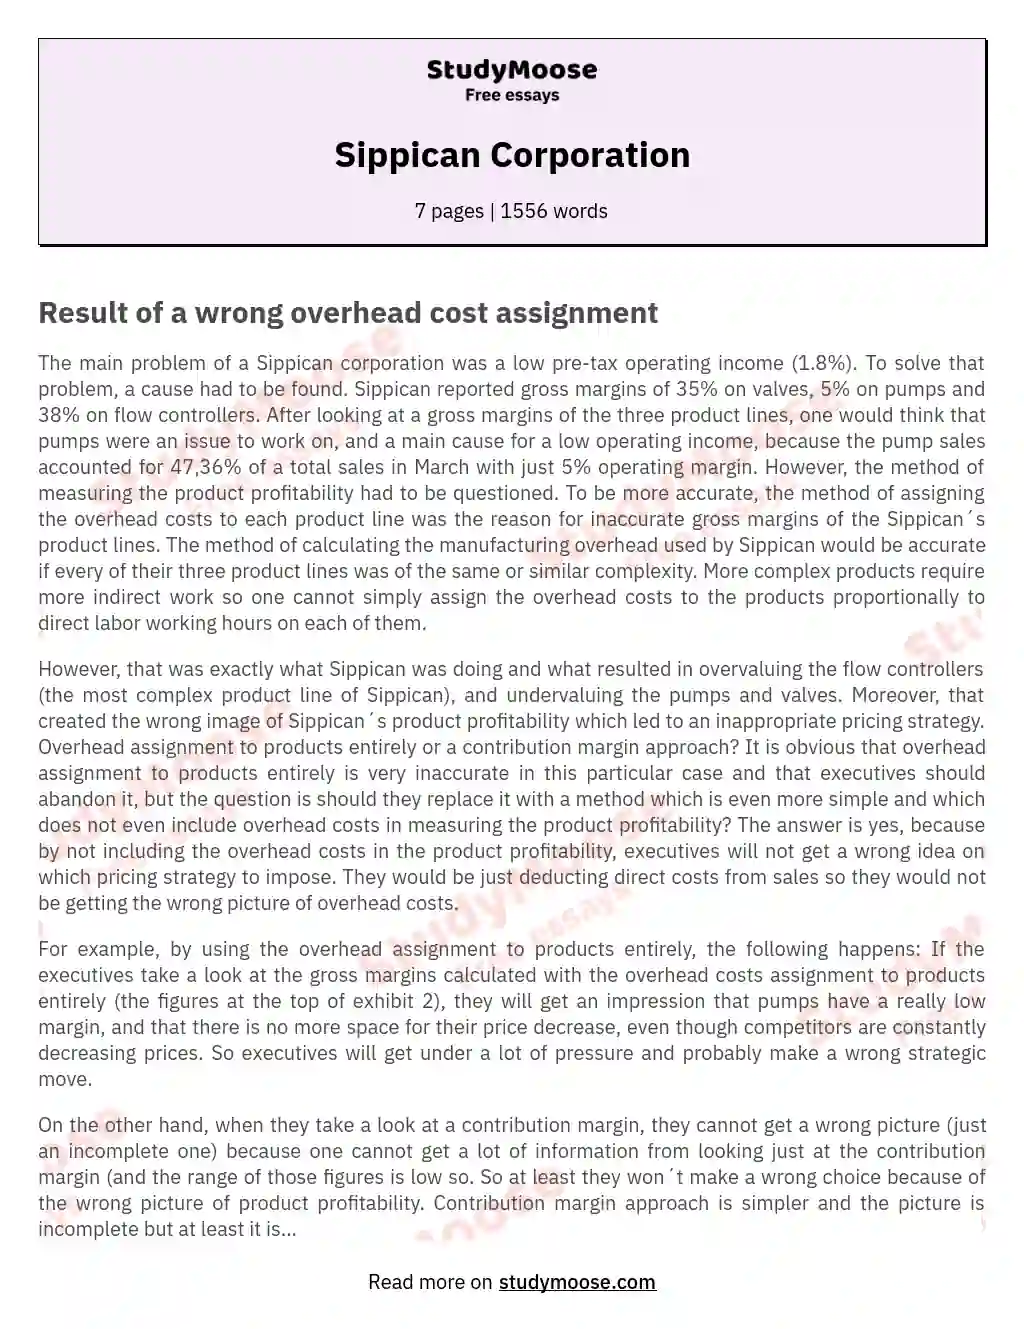 Sippican Corporation essay